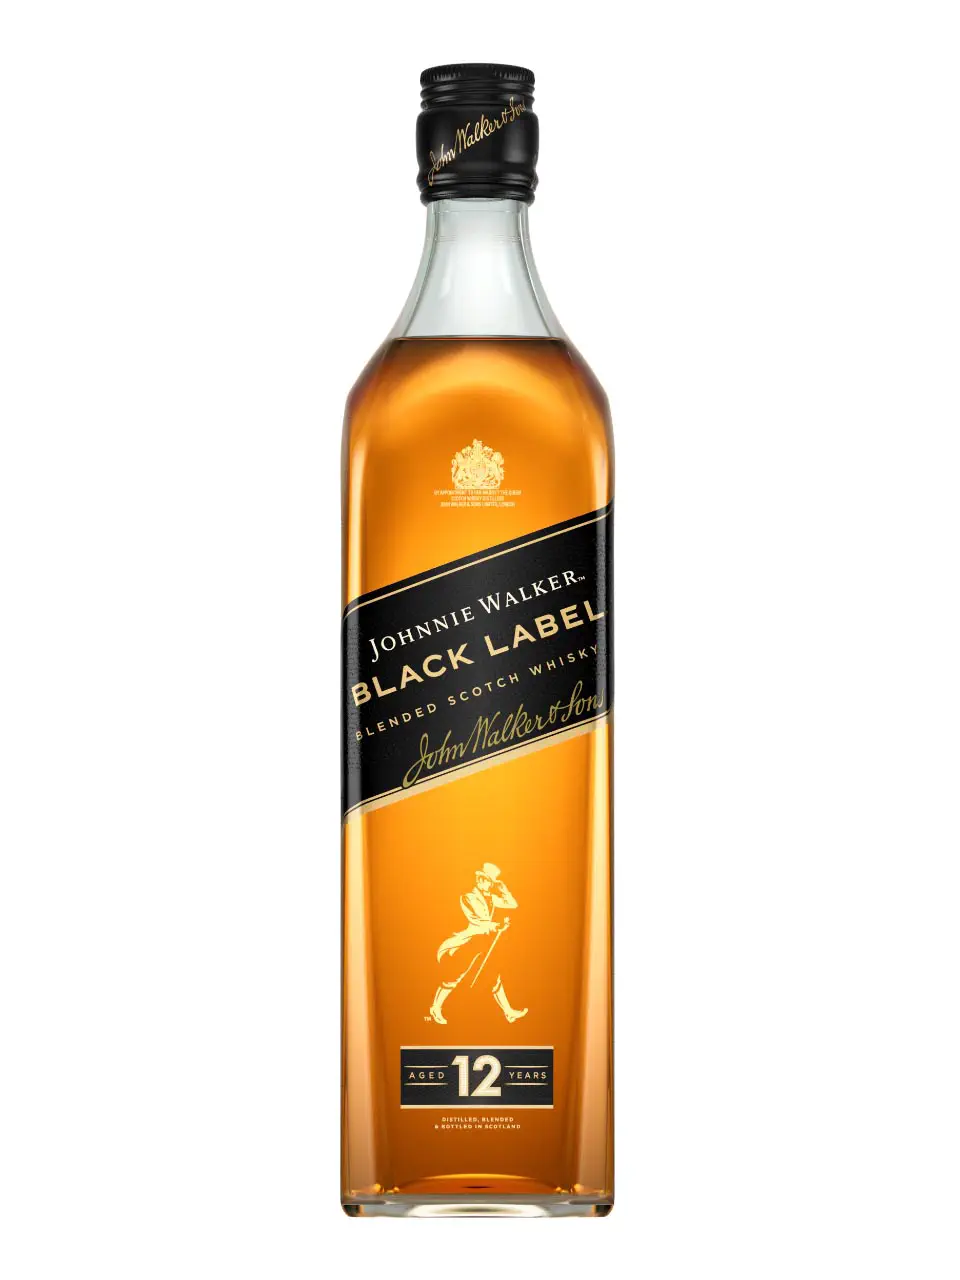 Johnnie Walker Whisky: Scotch legend since 1820